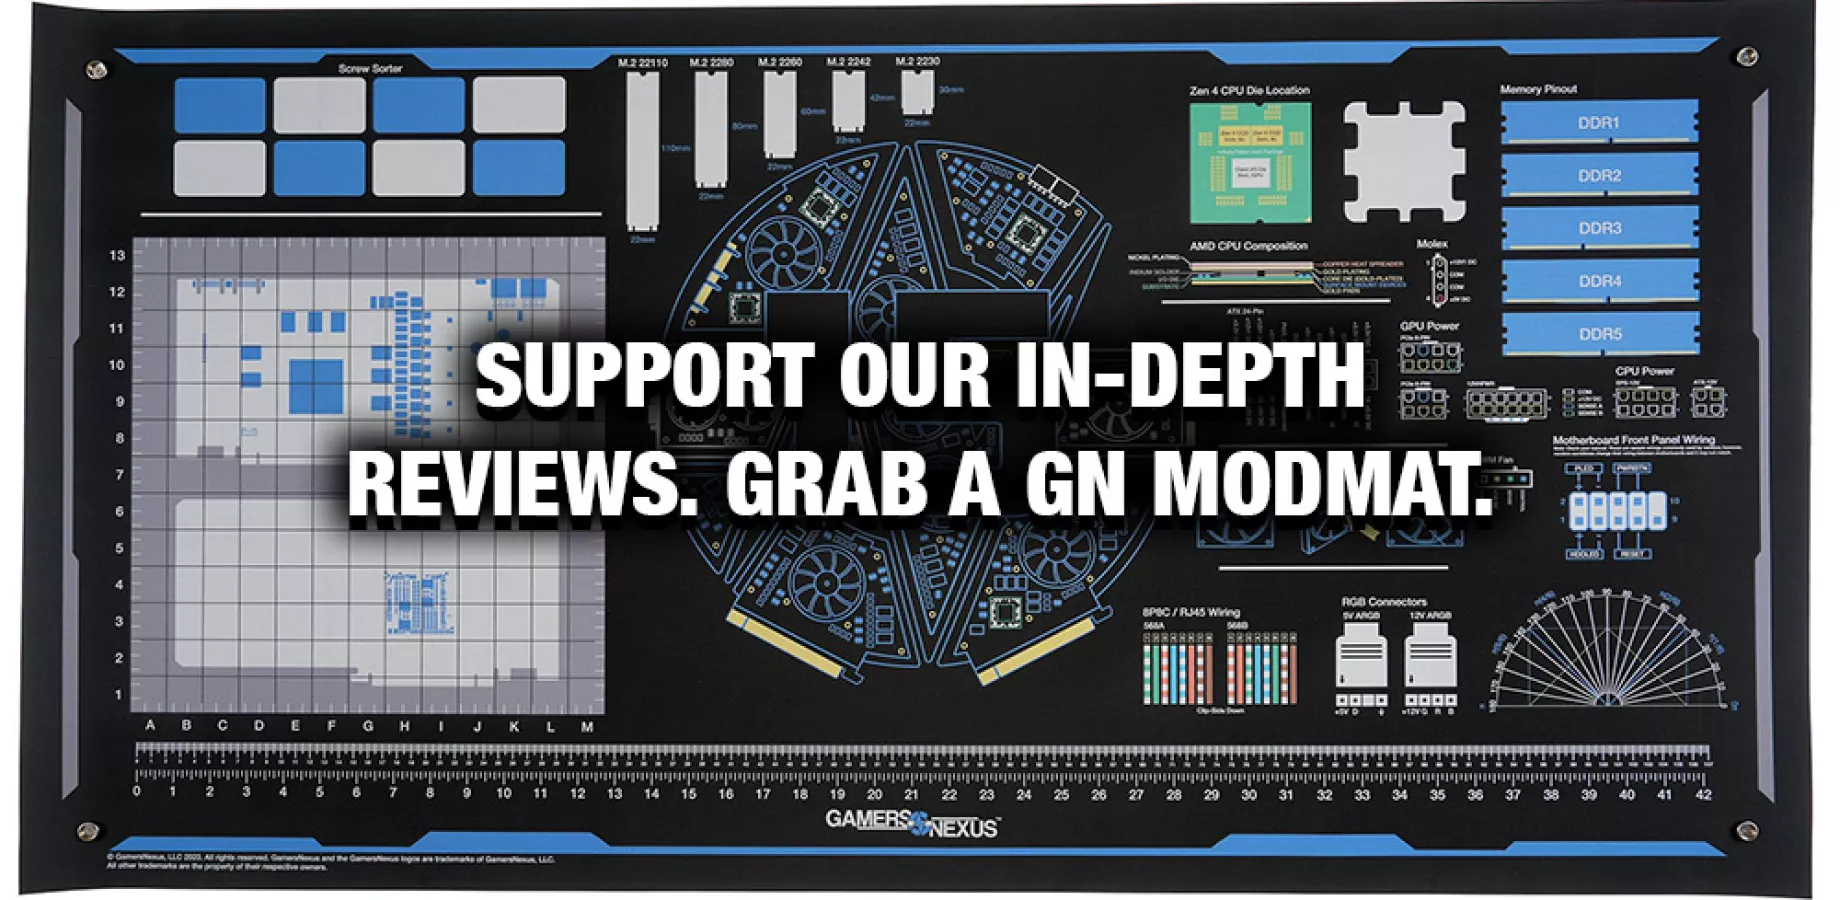 GN Mega Charts: CPU Cooler Benchmarks & Comparisons